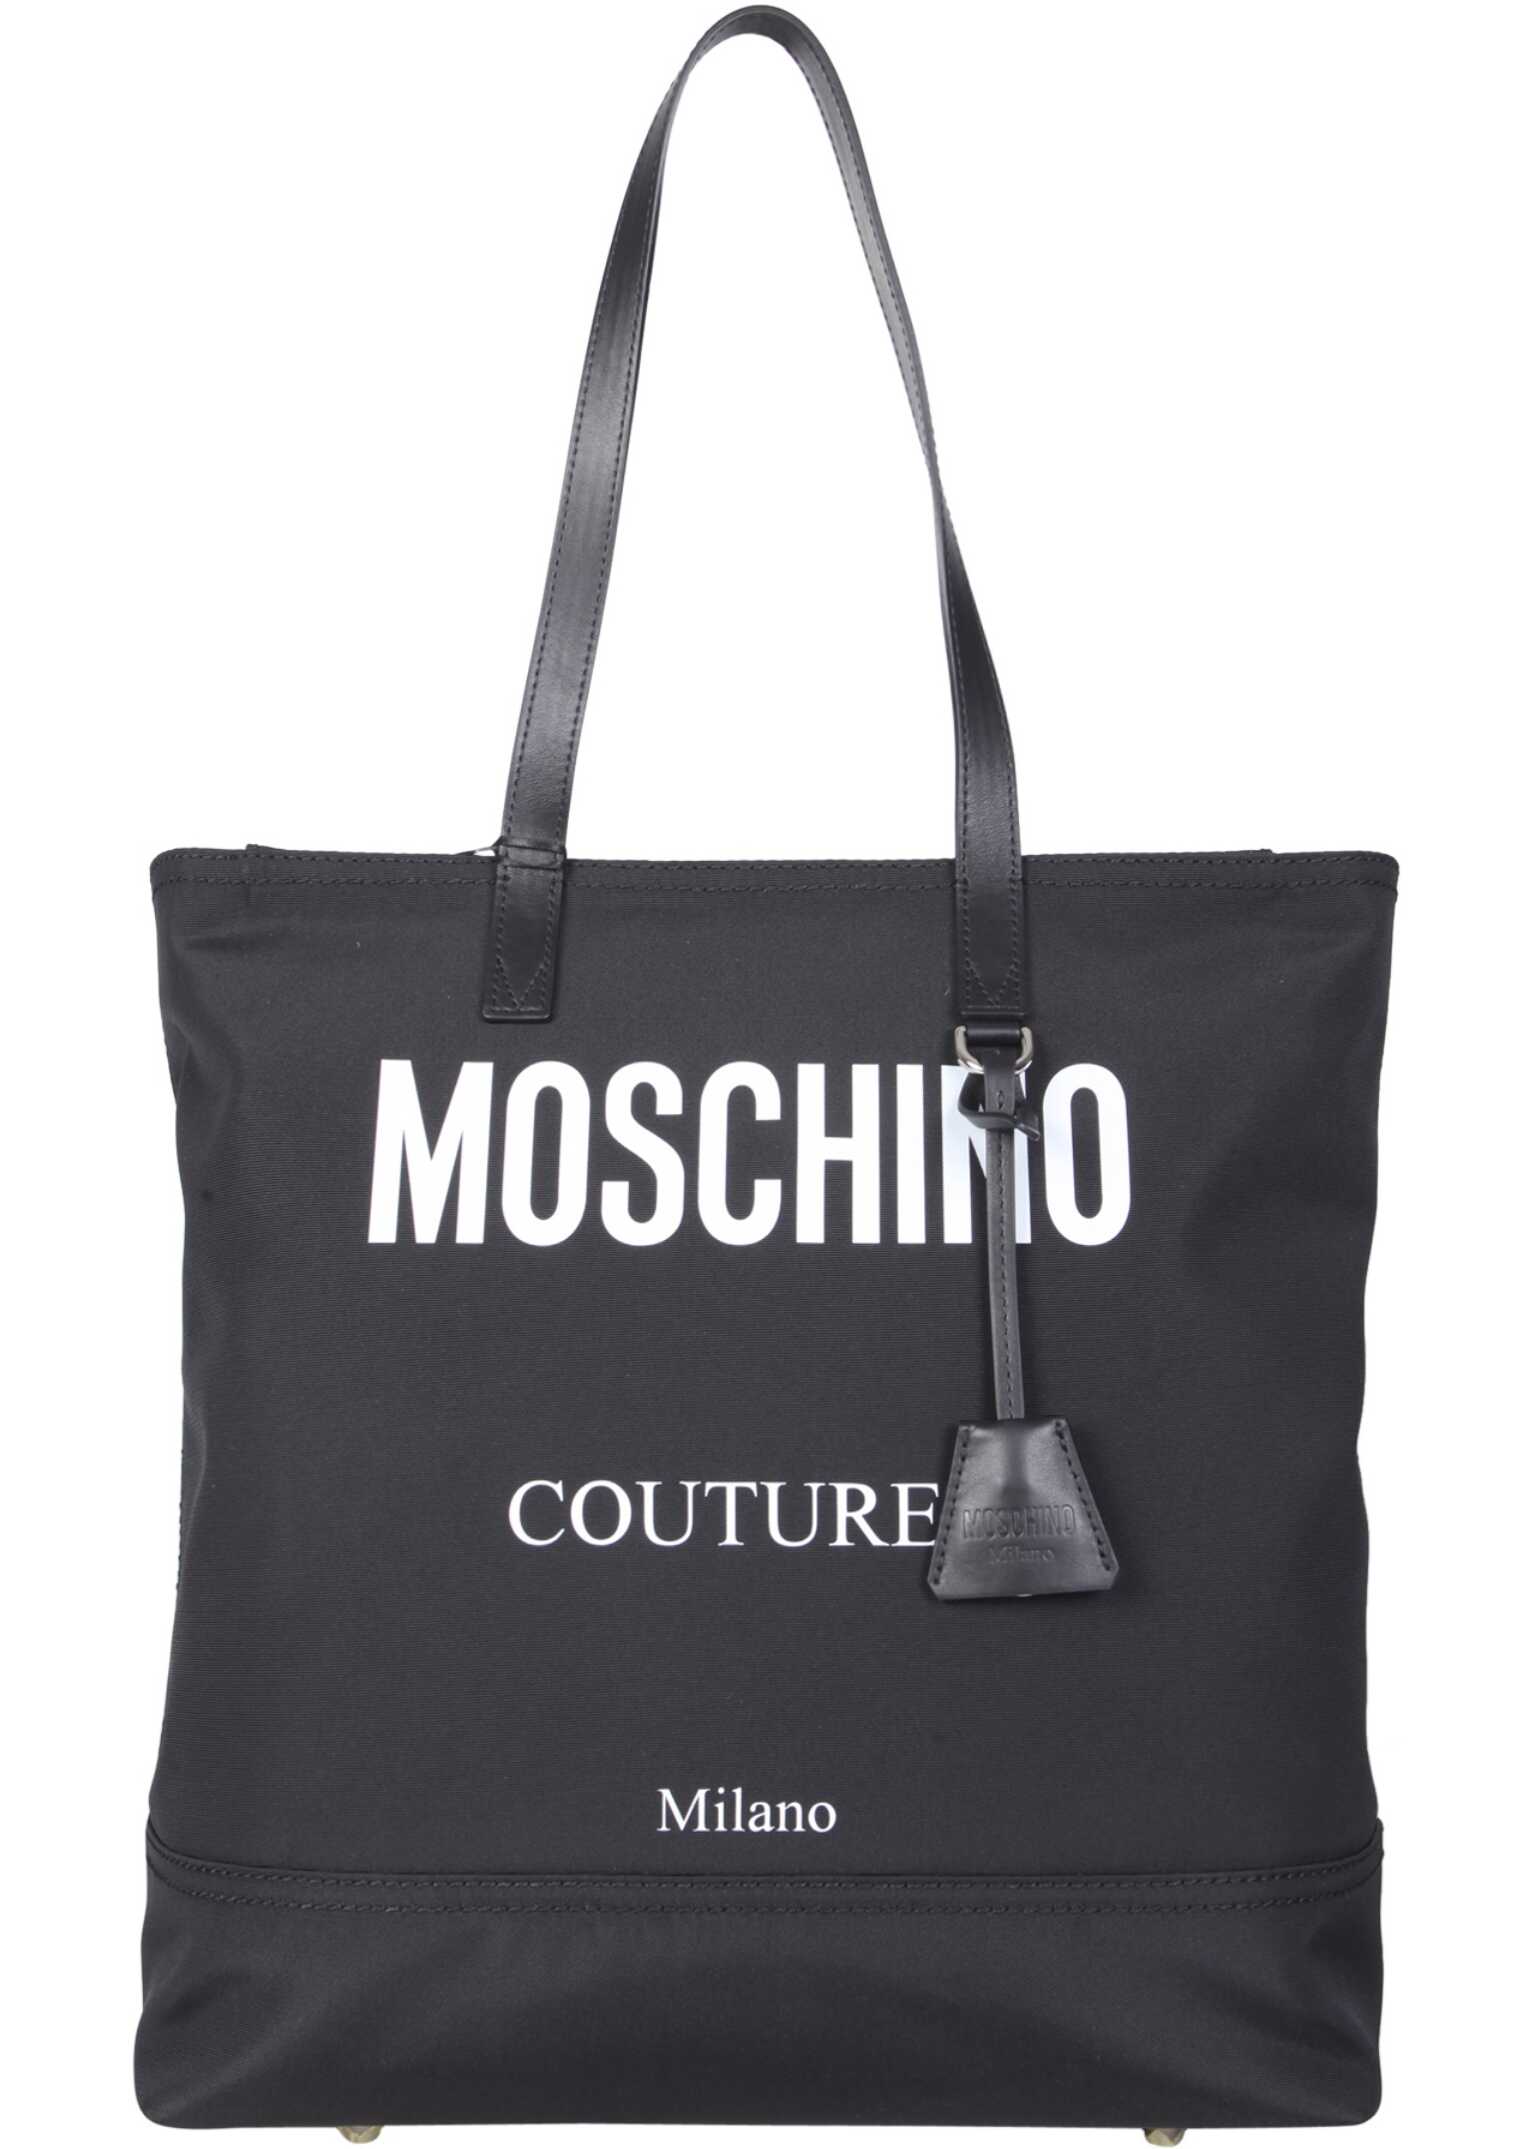 Moschino Tote Bag With Logo BLACK b-mall.ro